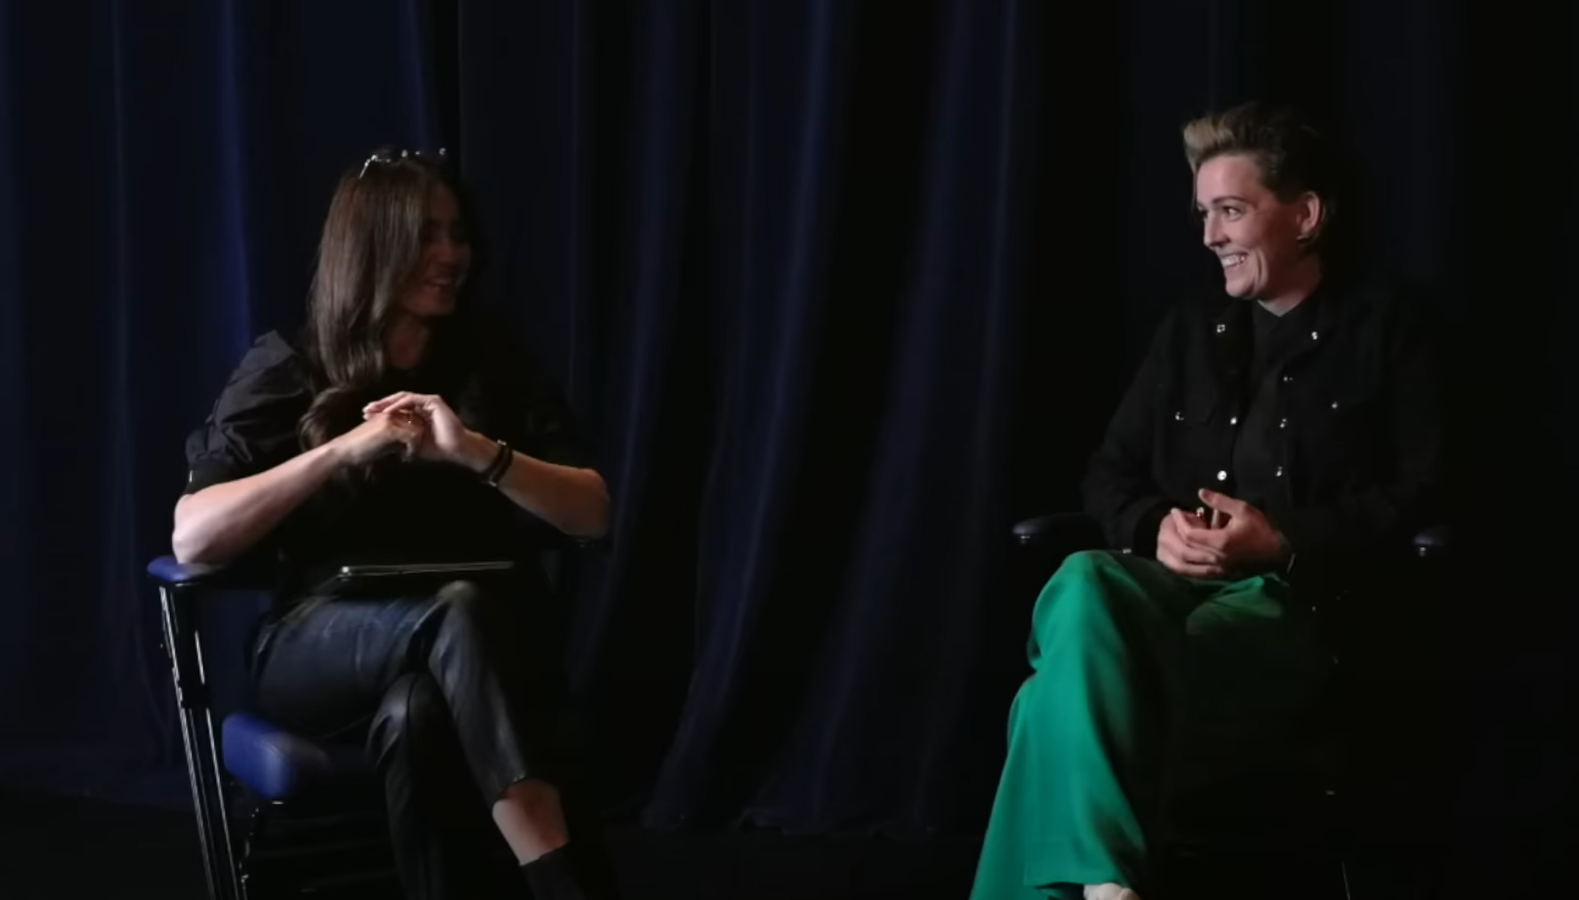 Brandi Carlile – The producer interviews – a breakdown.